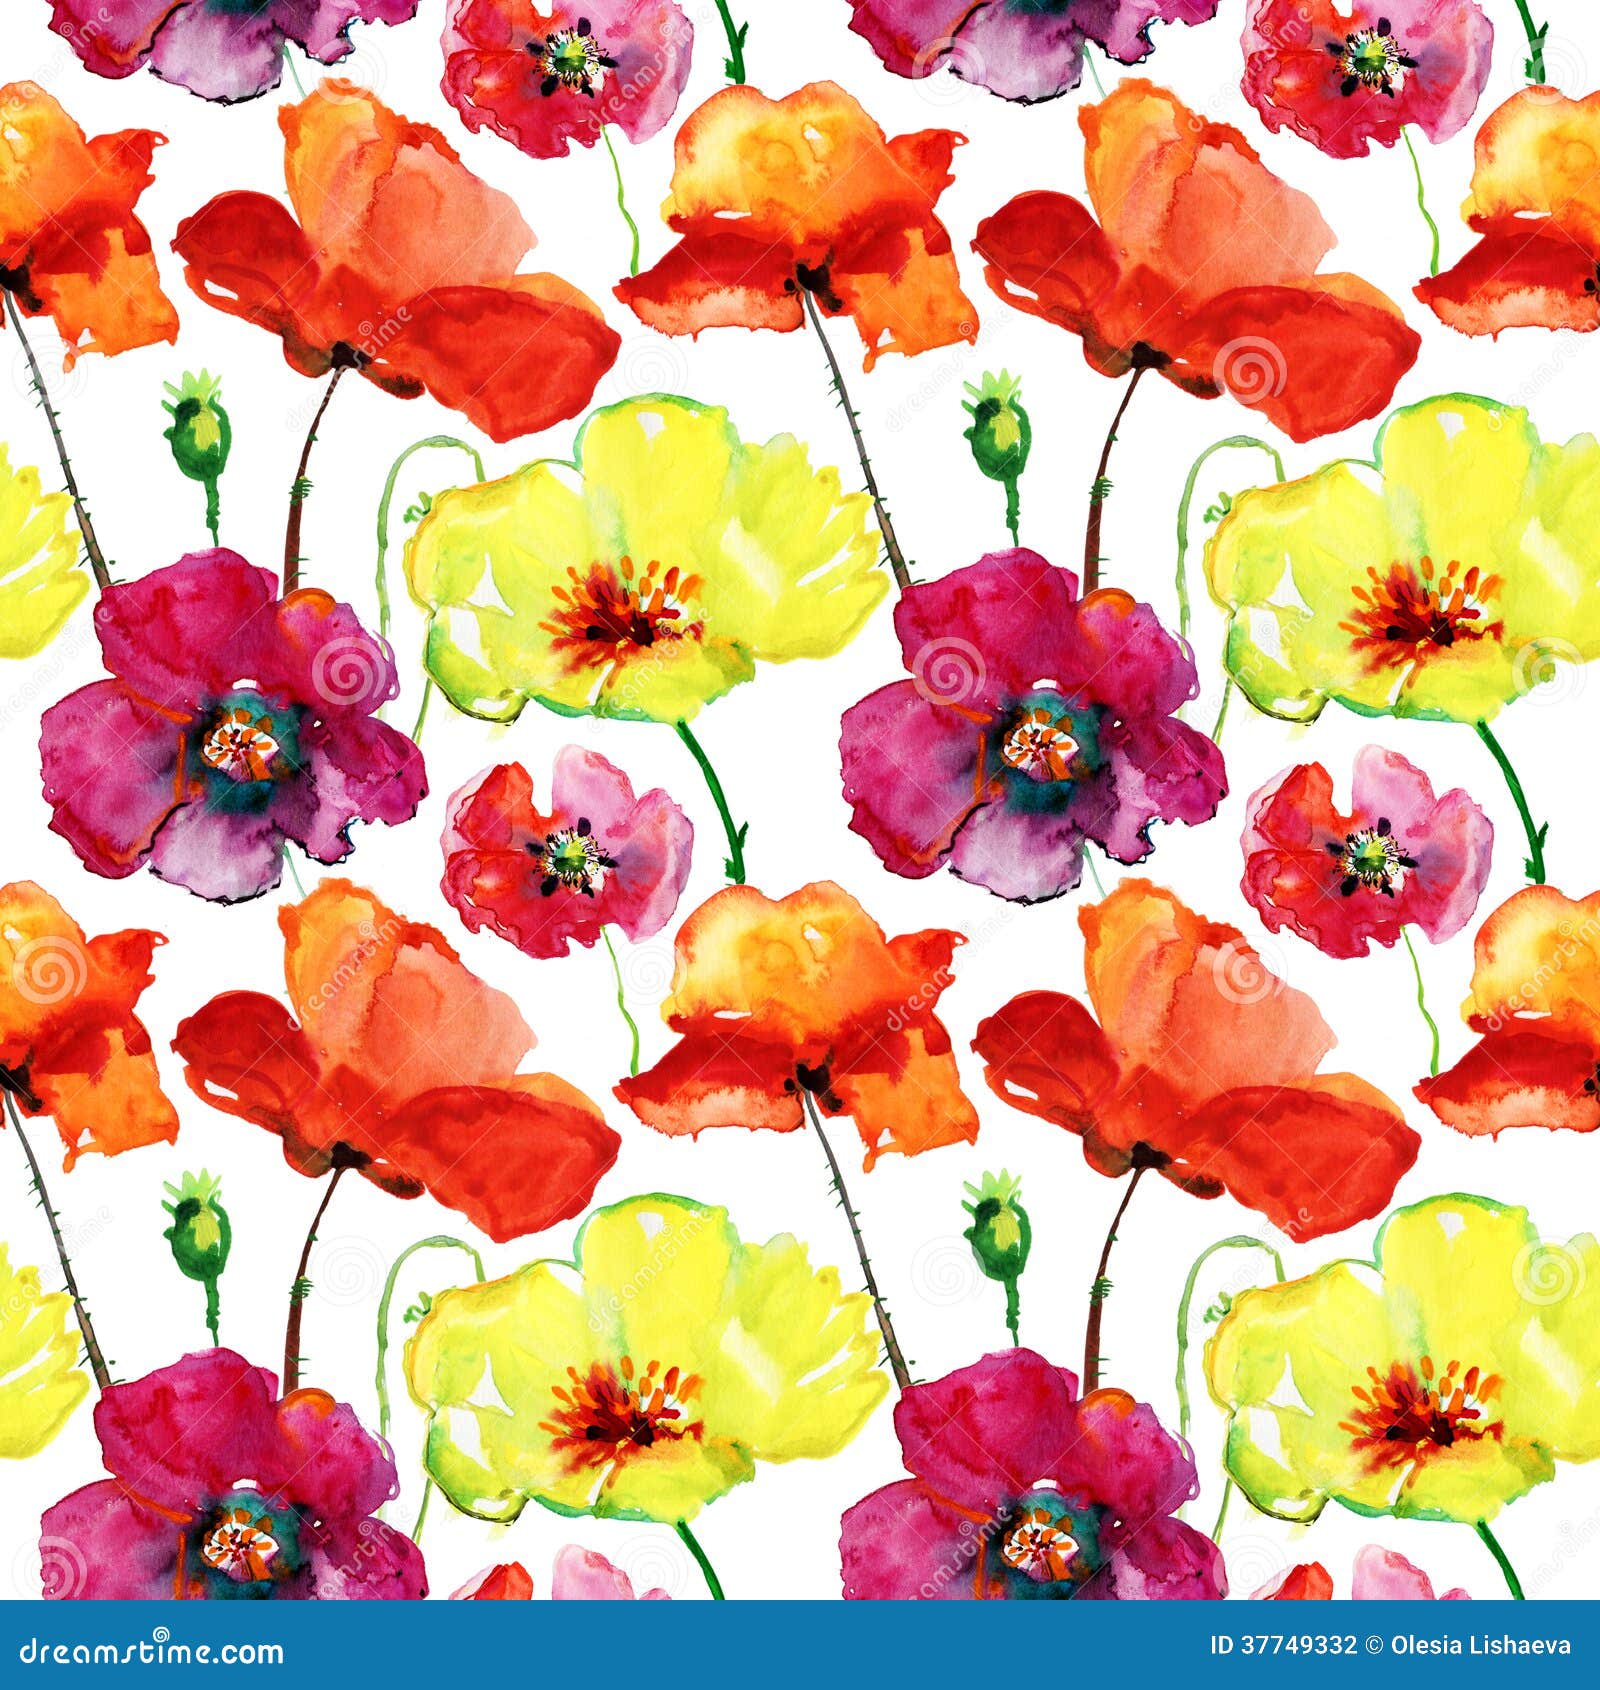 Poppy Flowers Illustration, Seamless Pattern Stock Illustration ...